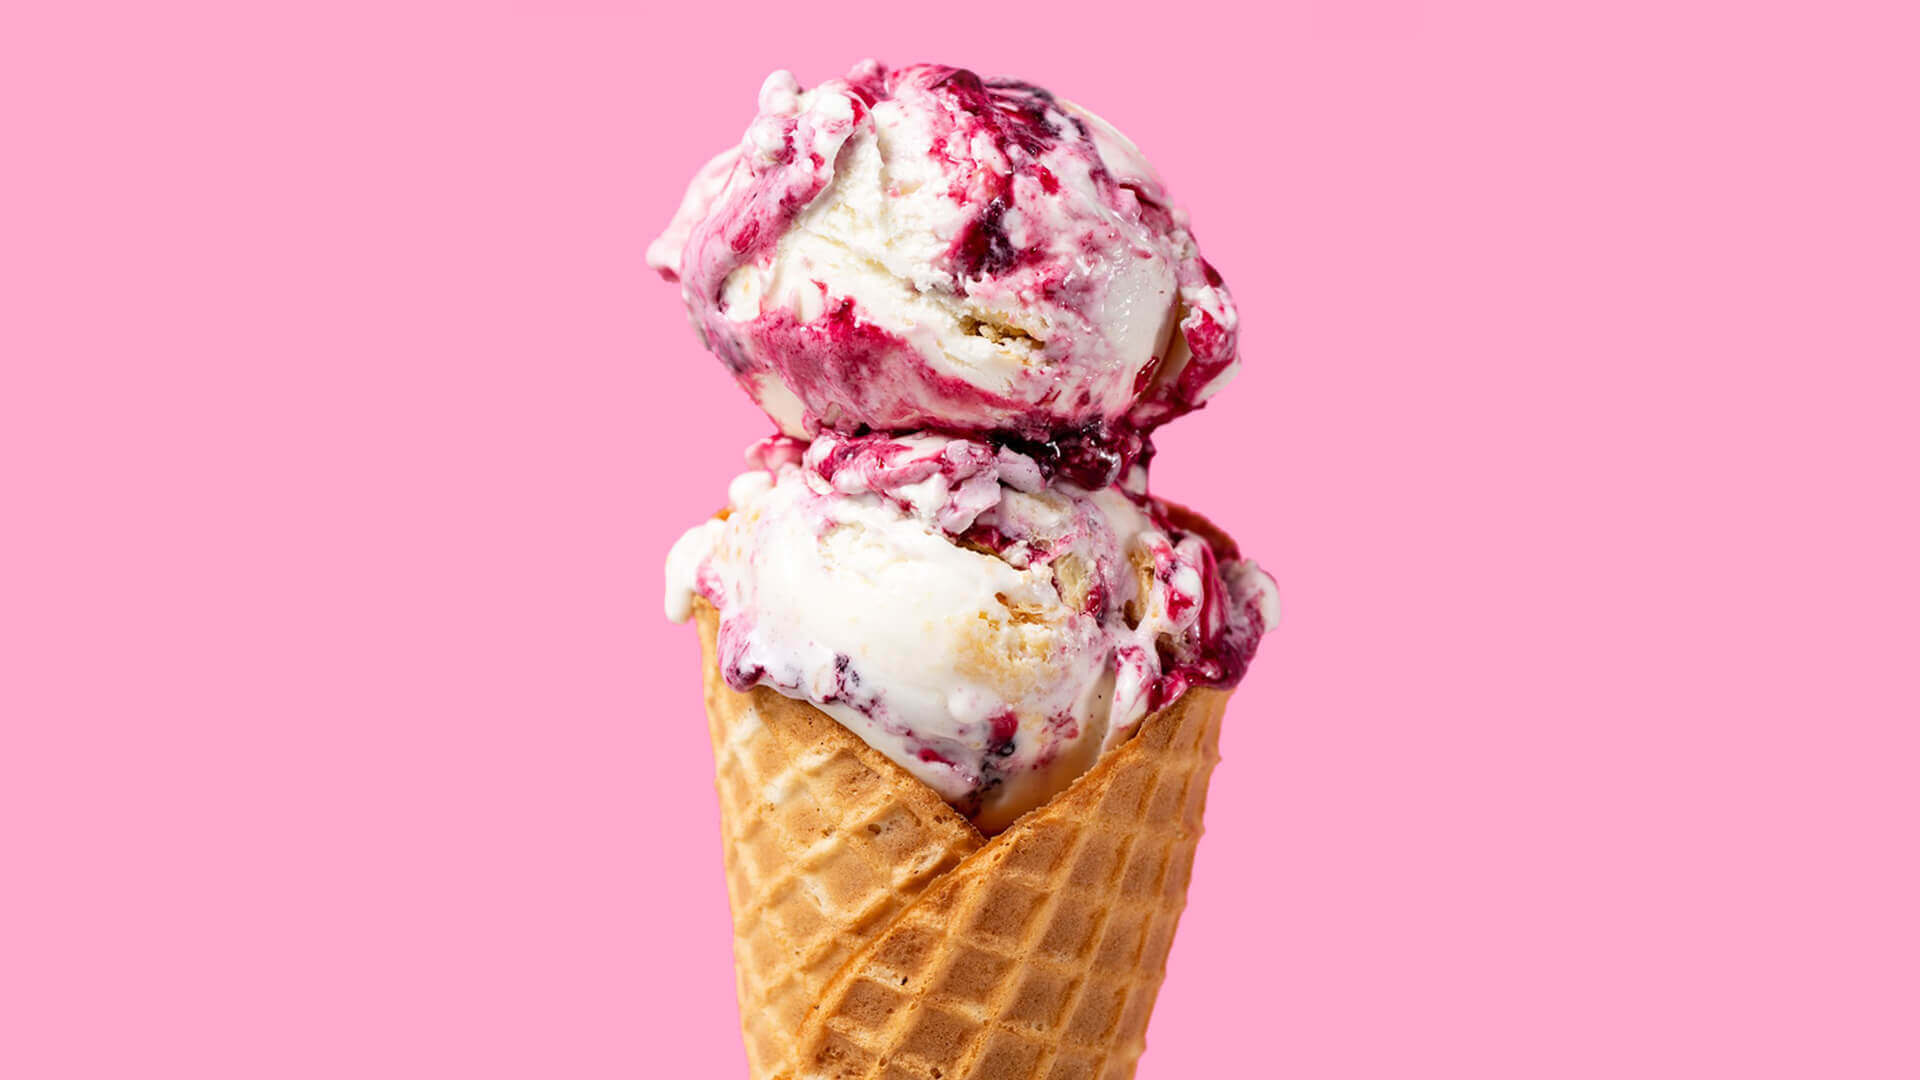 Ice cream cone against pink background